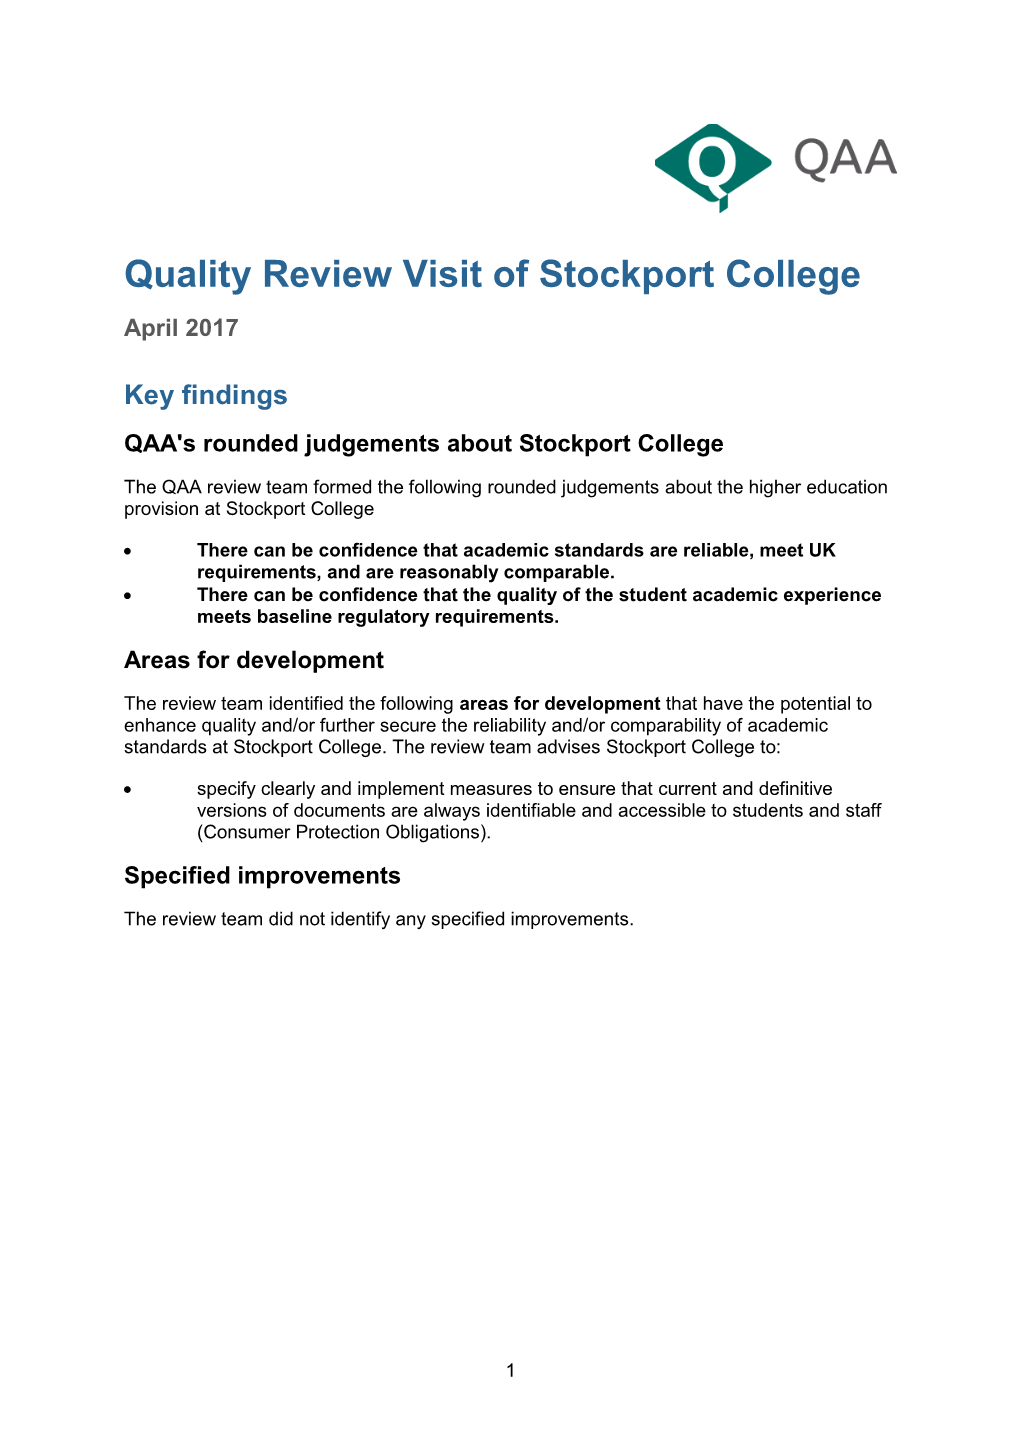 Stockport College, April 2017